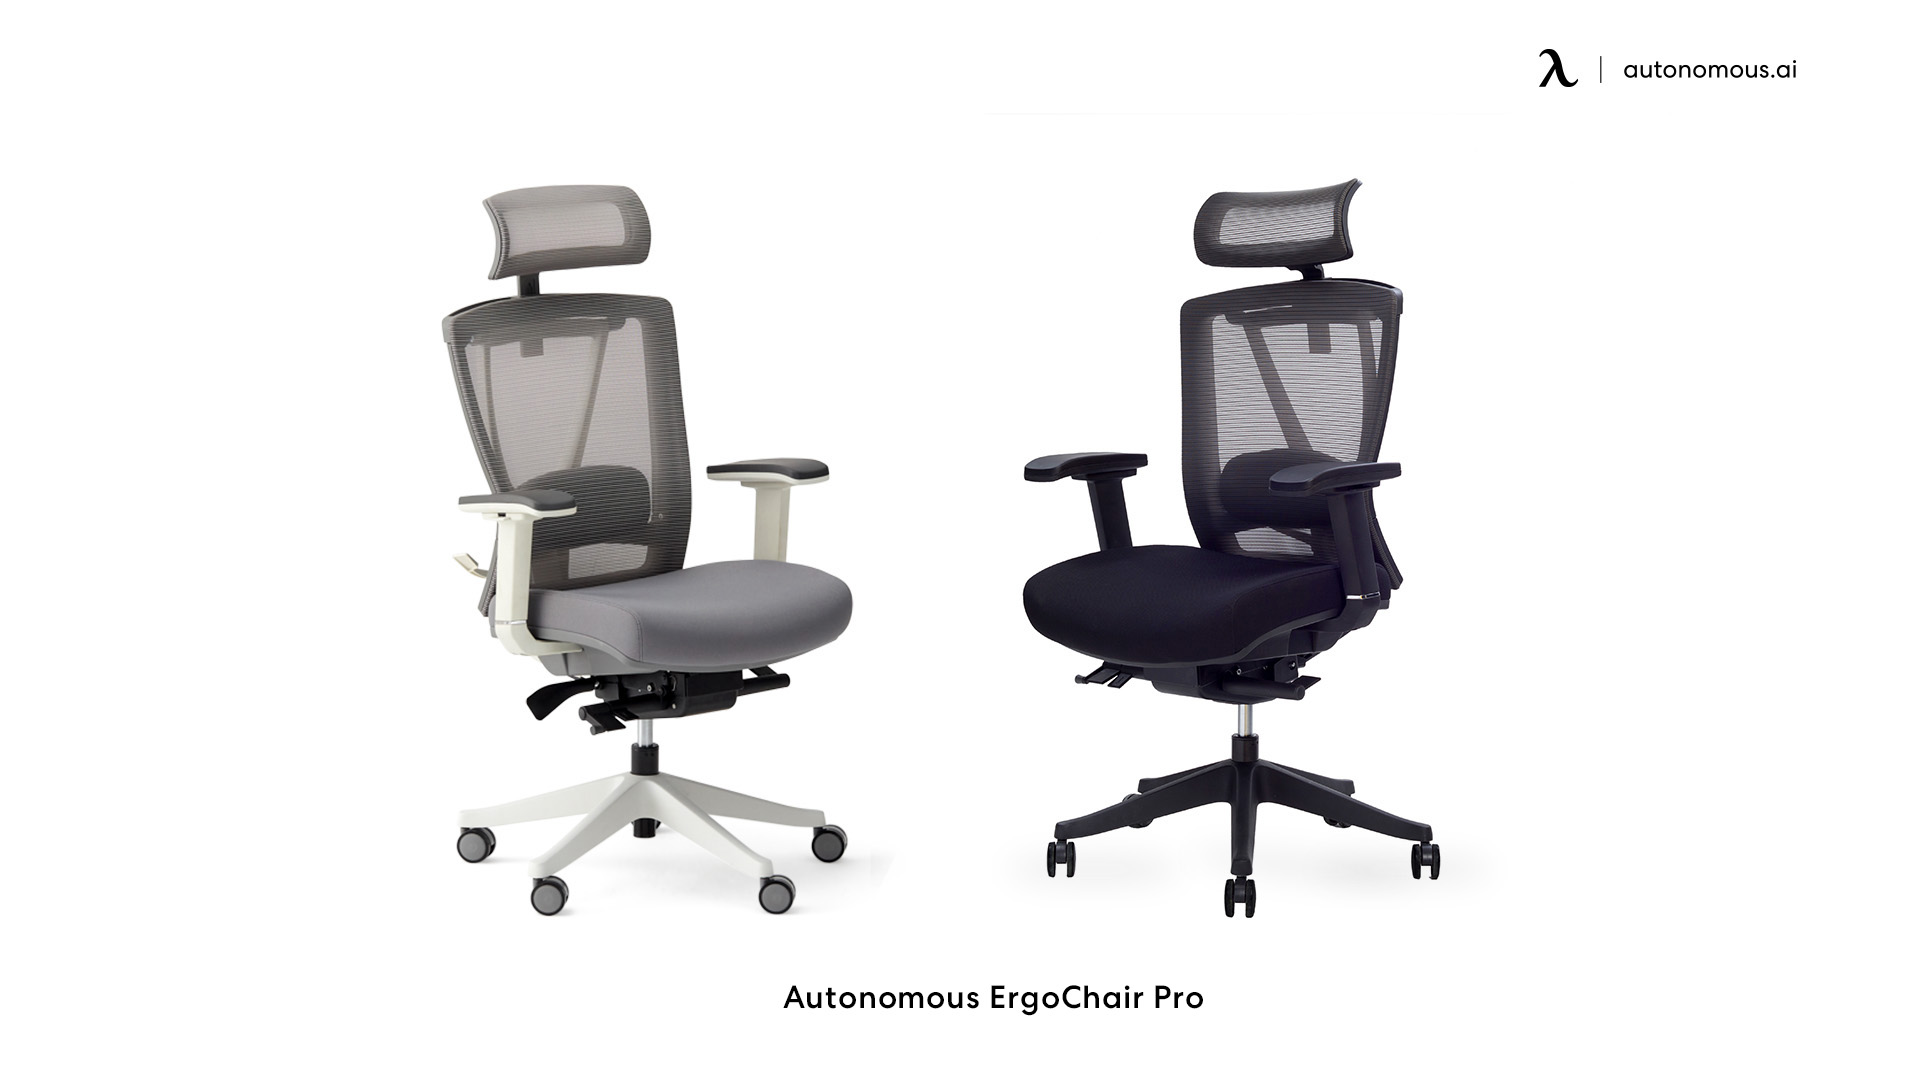 ErgoChair Pro mid back vs high back chair